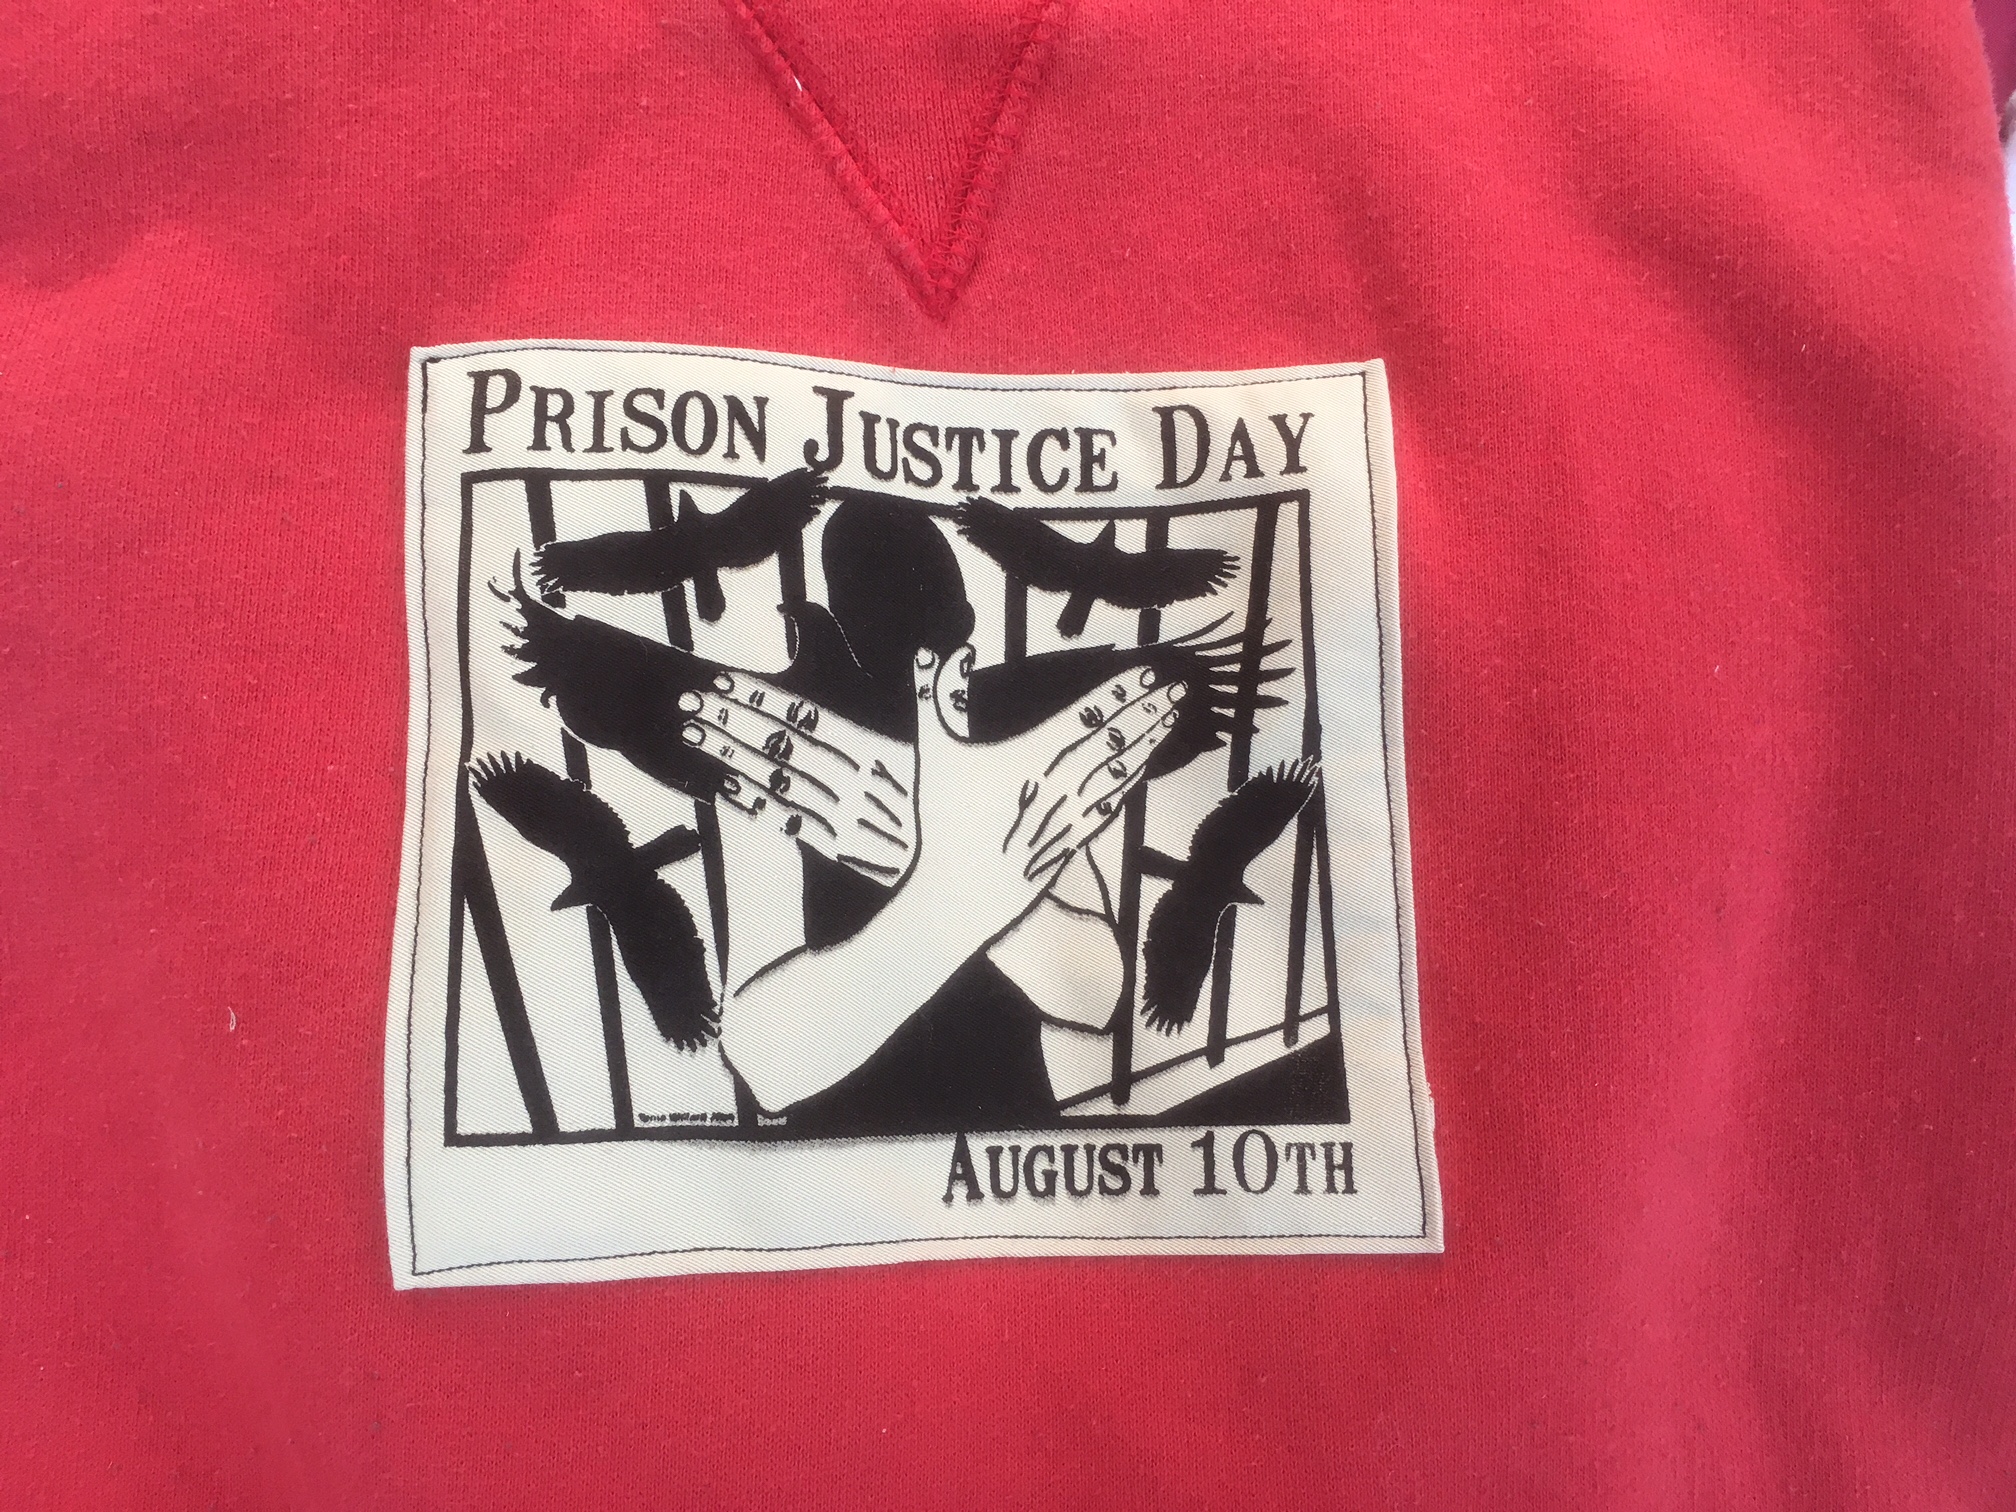 Prison justice day - August 10, 2017 (4).jpg